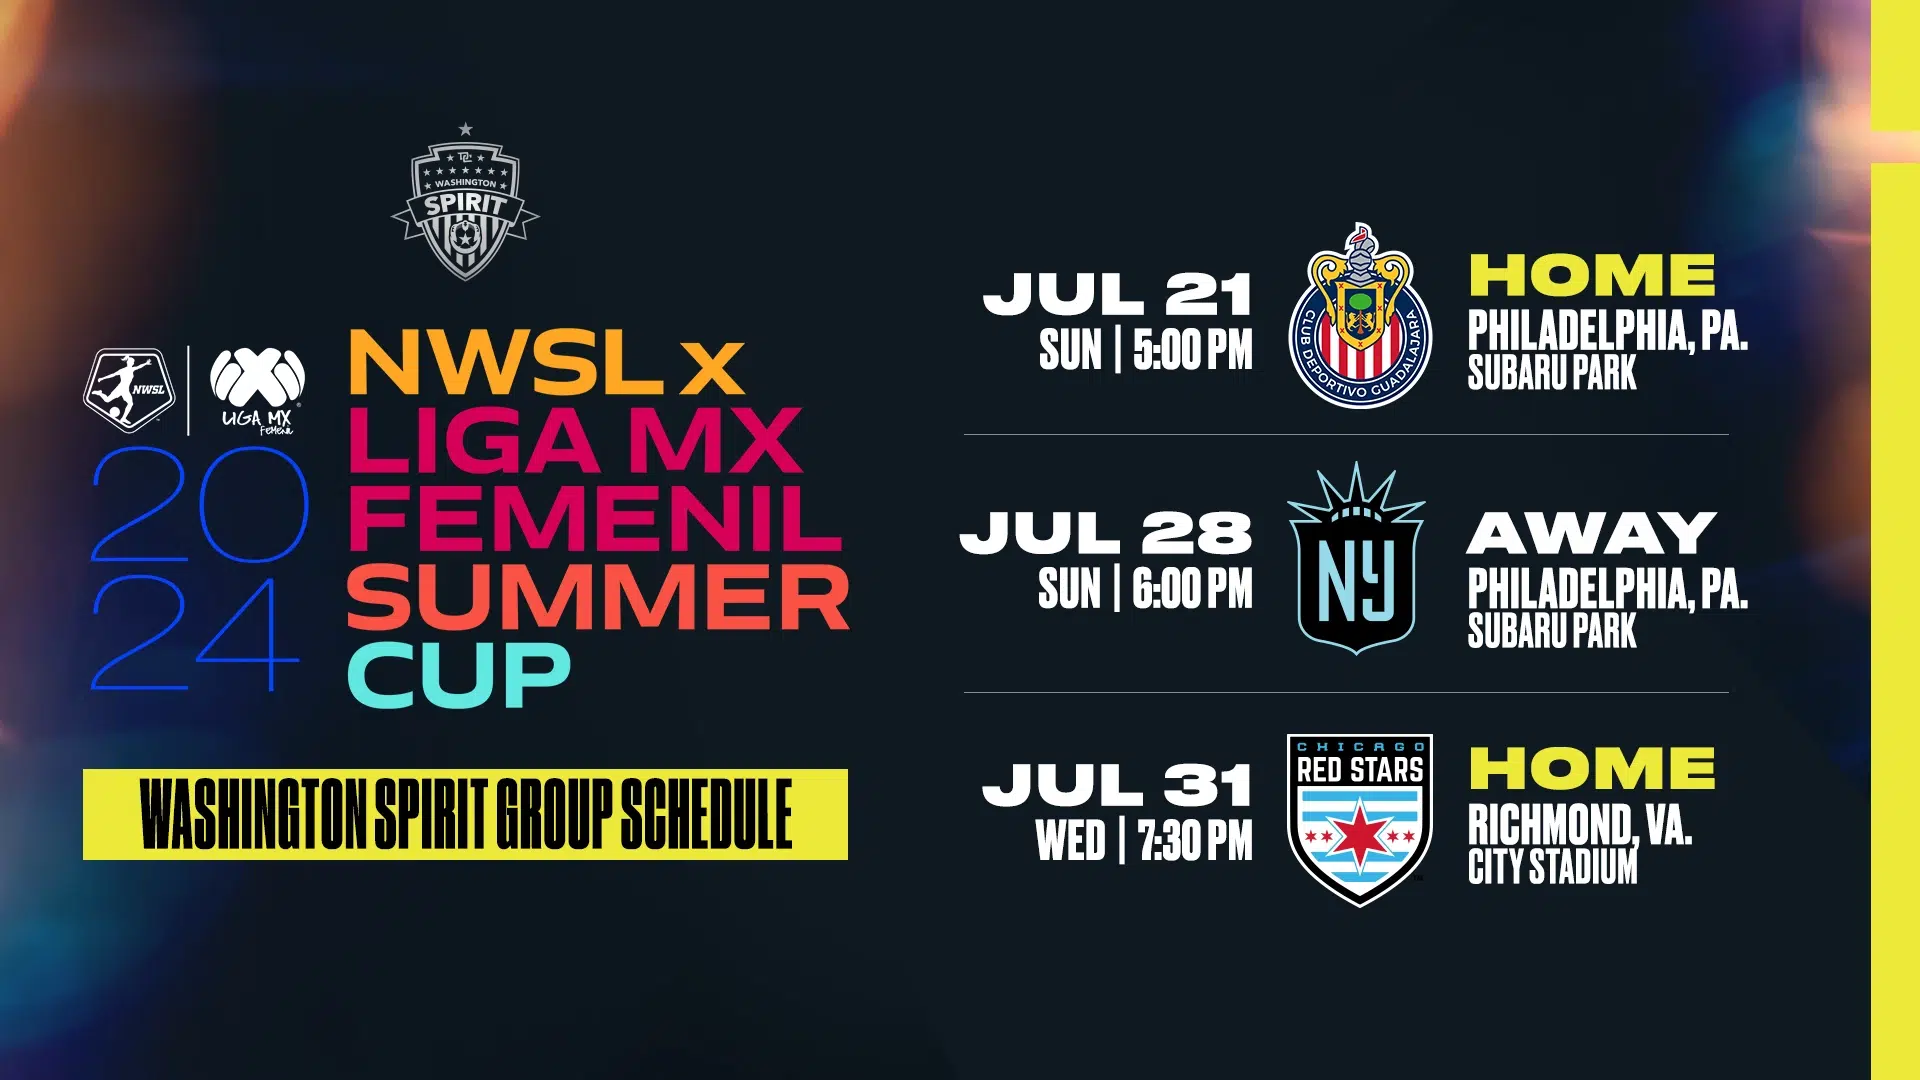 Washington Spirit to Take NWSL x La Liga MX Femenil Summer Cup On the Road Featured Image